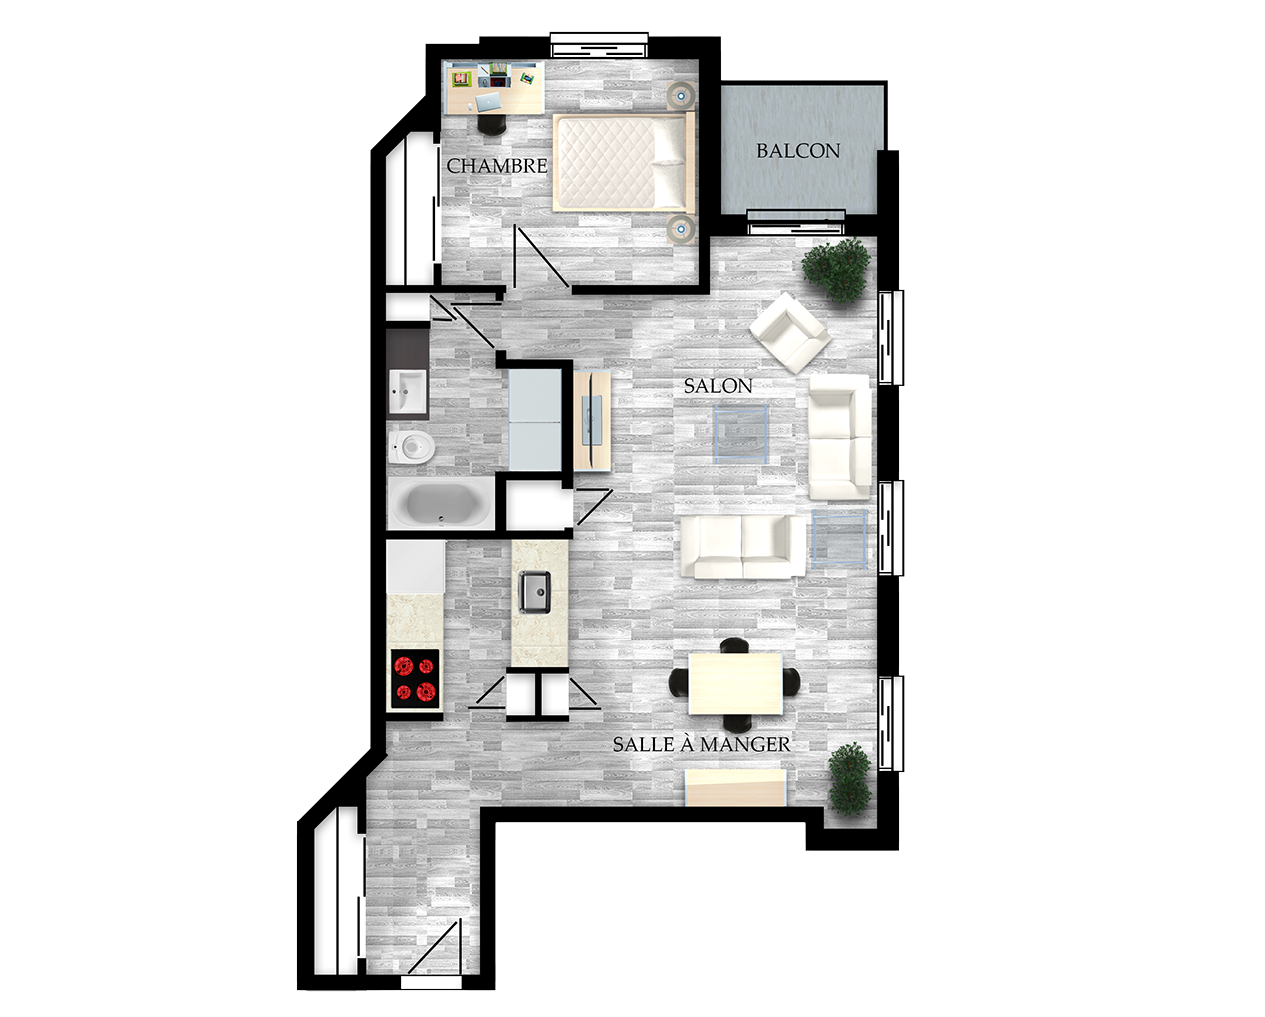 Student apartments